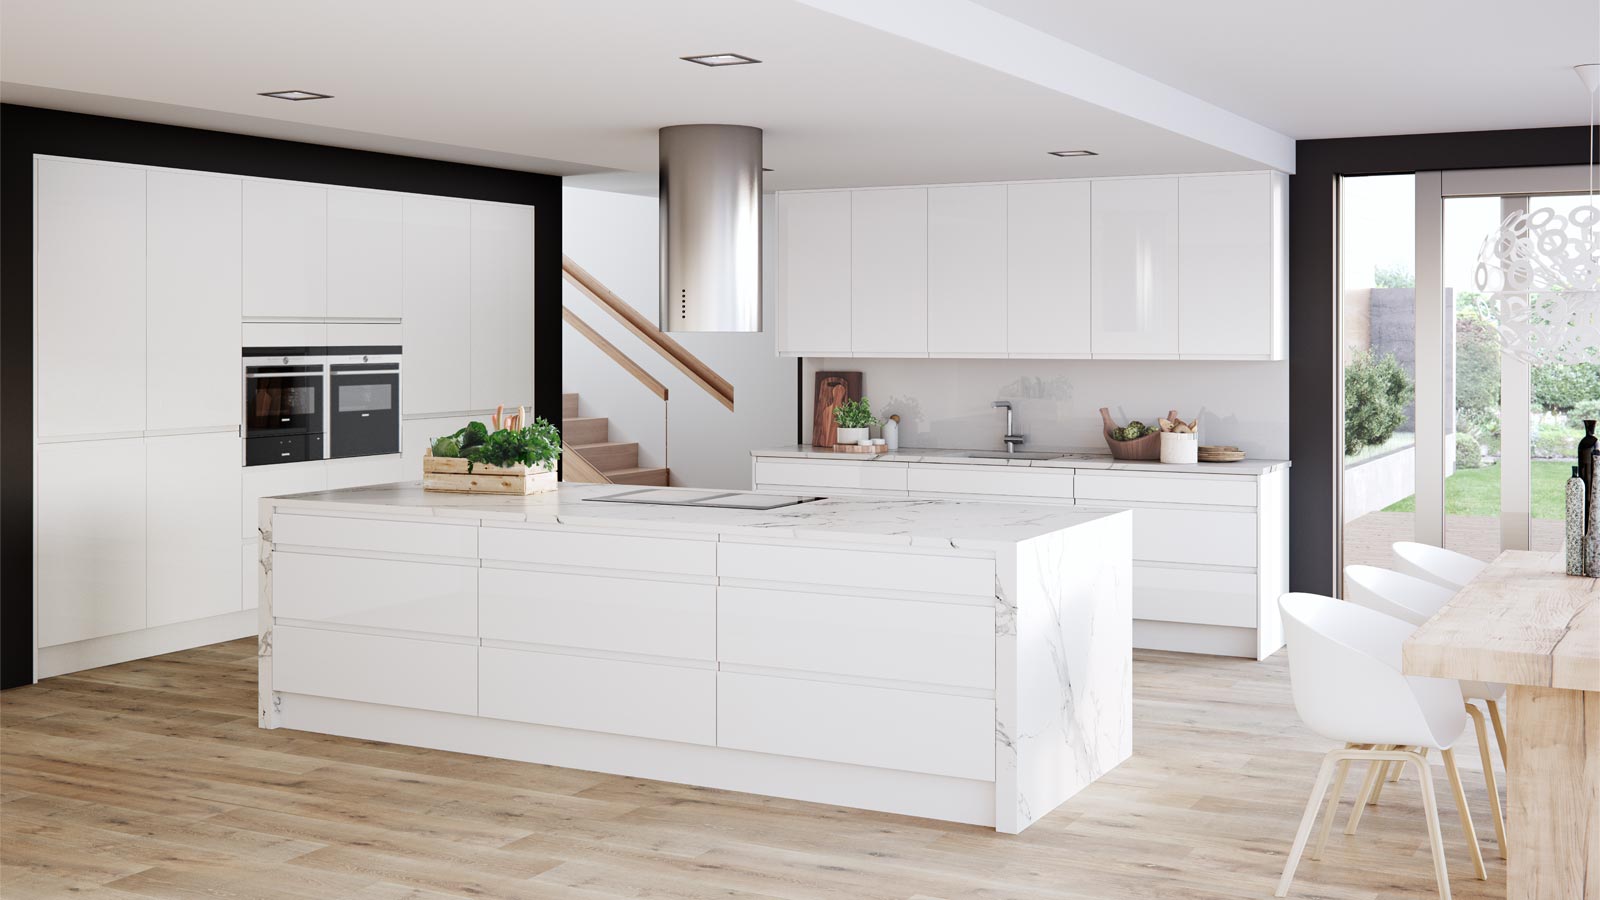 A white handleless kitchen with white gloss handleless kitchen doors